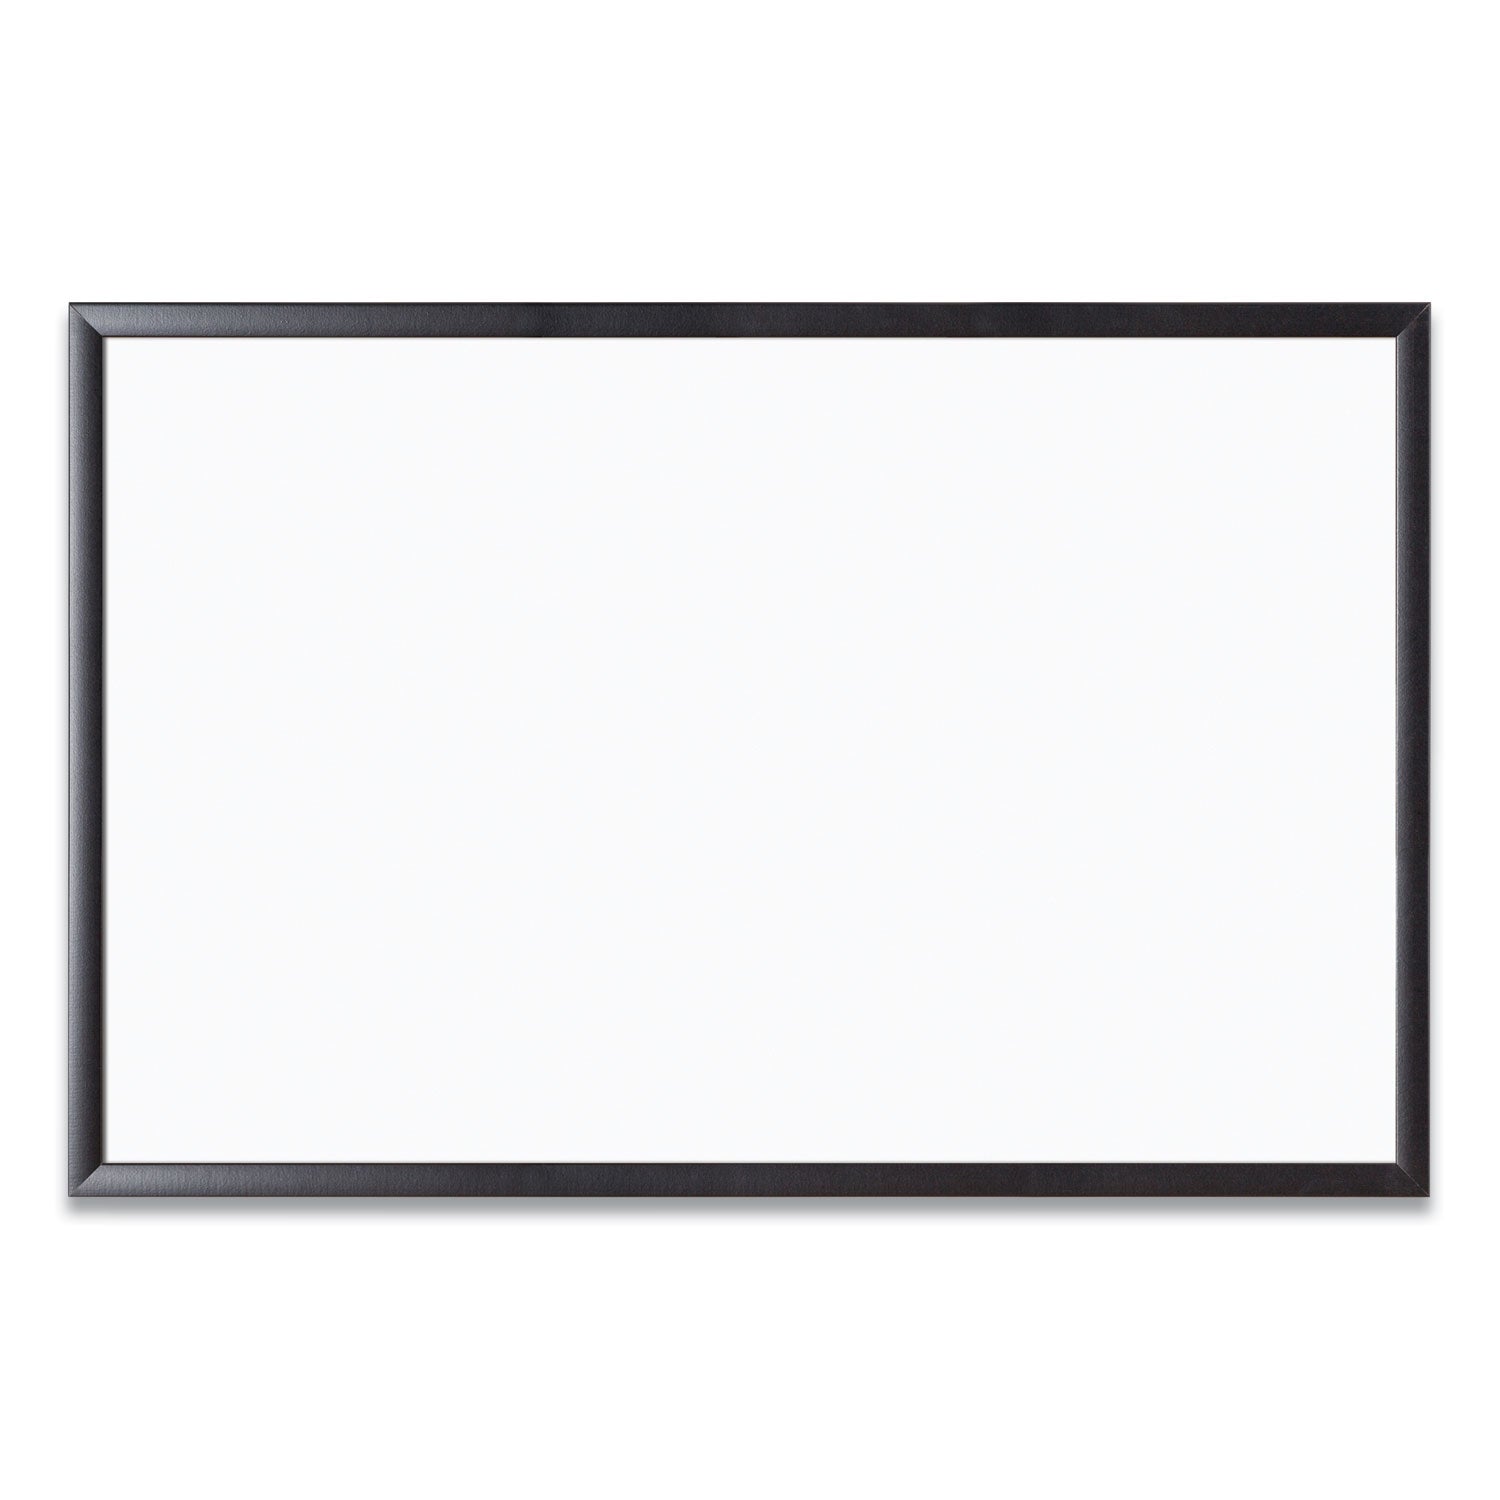 magnetic-dry-erase-board-with-wood-frame-35-x-23-white-surface-black-frame_ubr311u0001 - 1